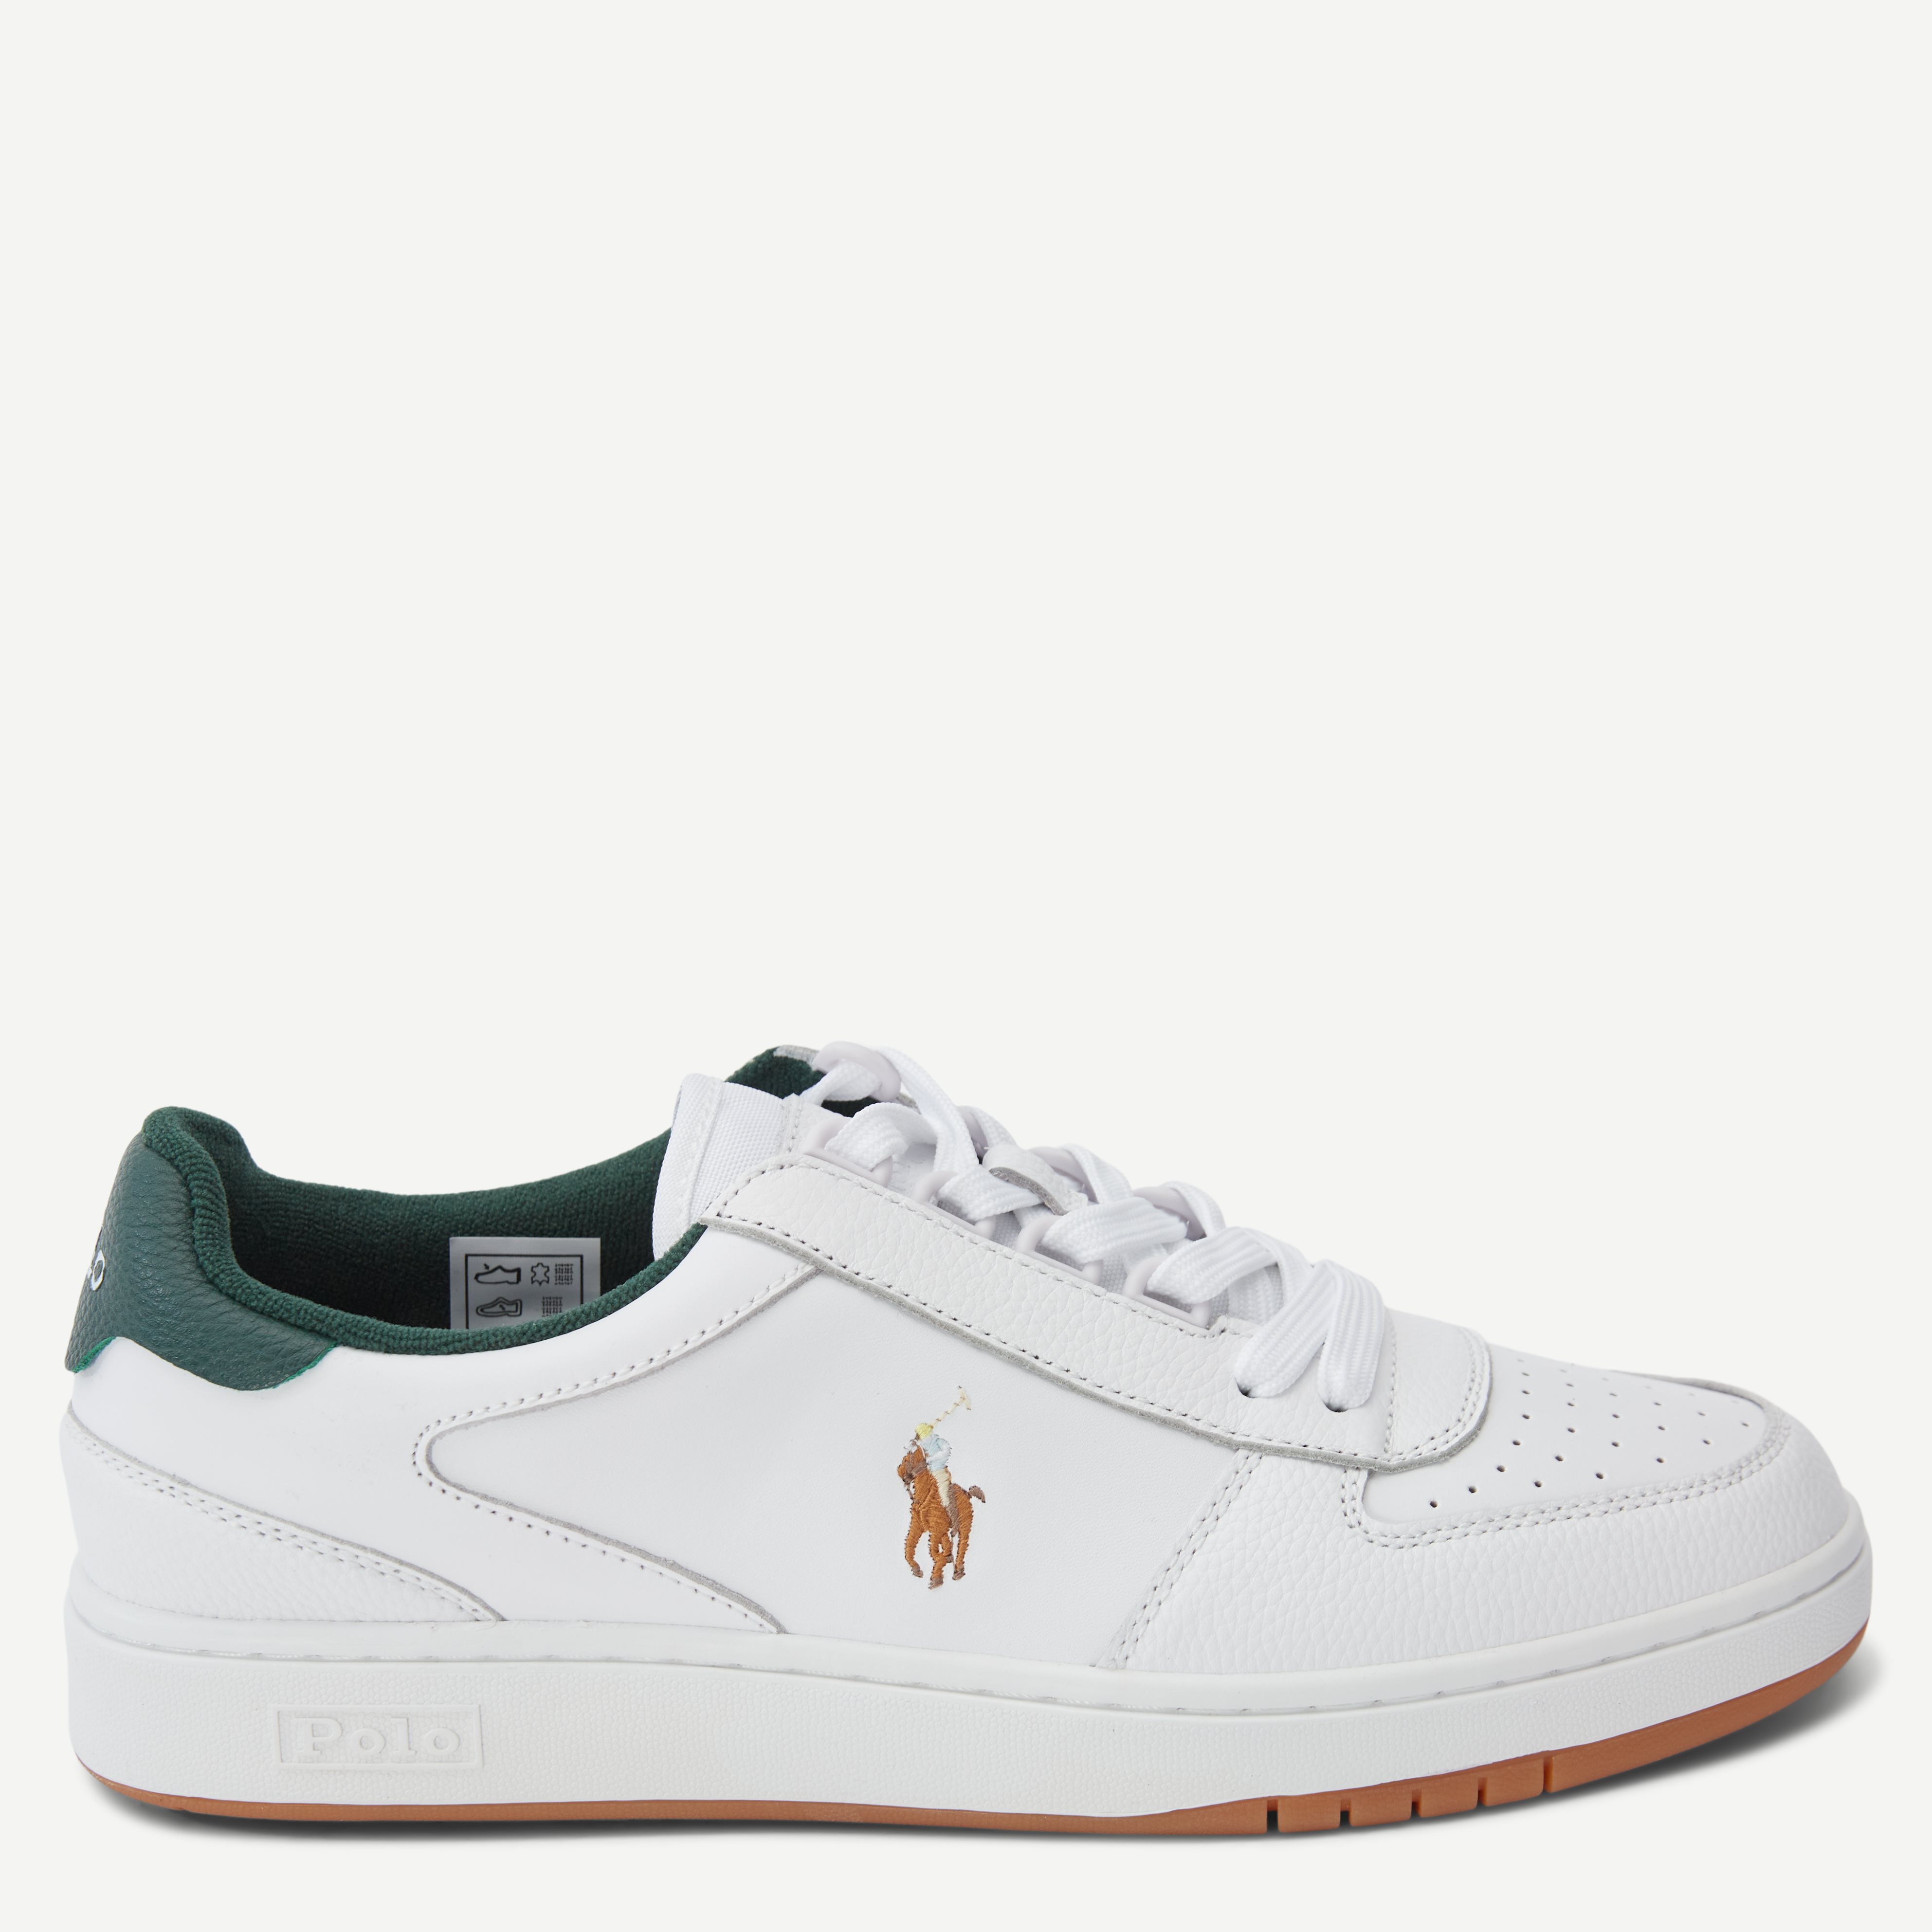 Polo Ralph Lauren Shoes 809877610 White